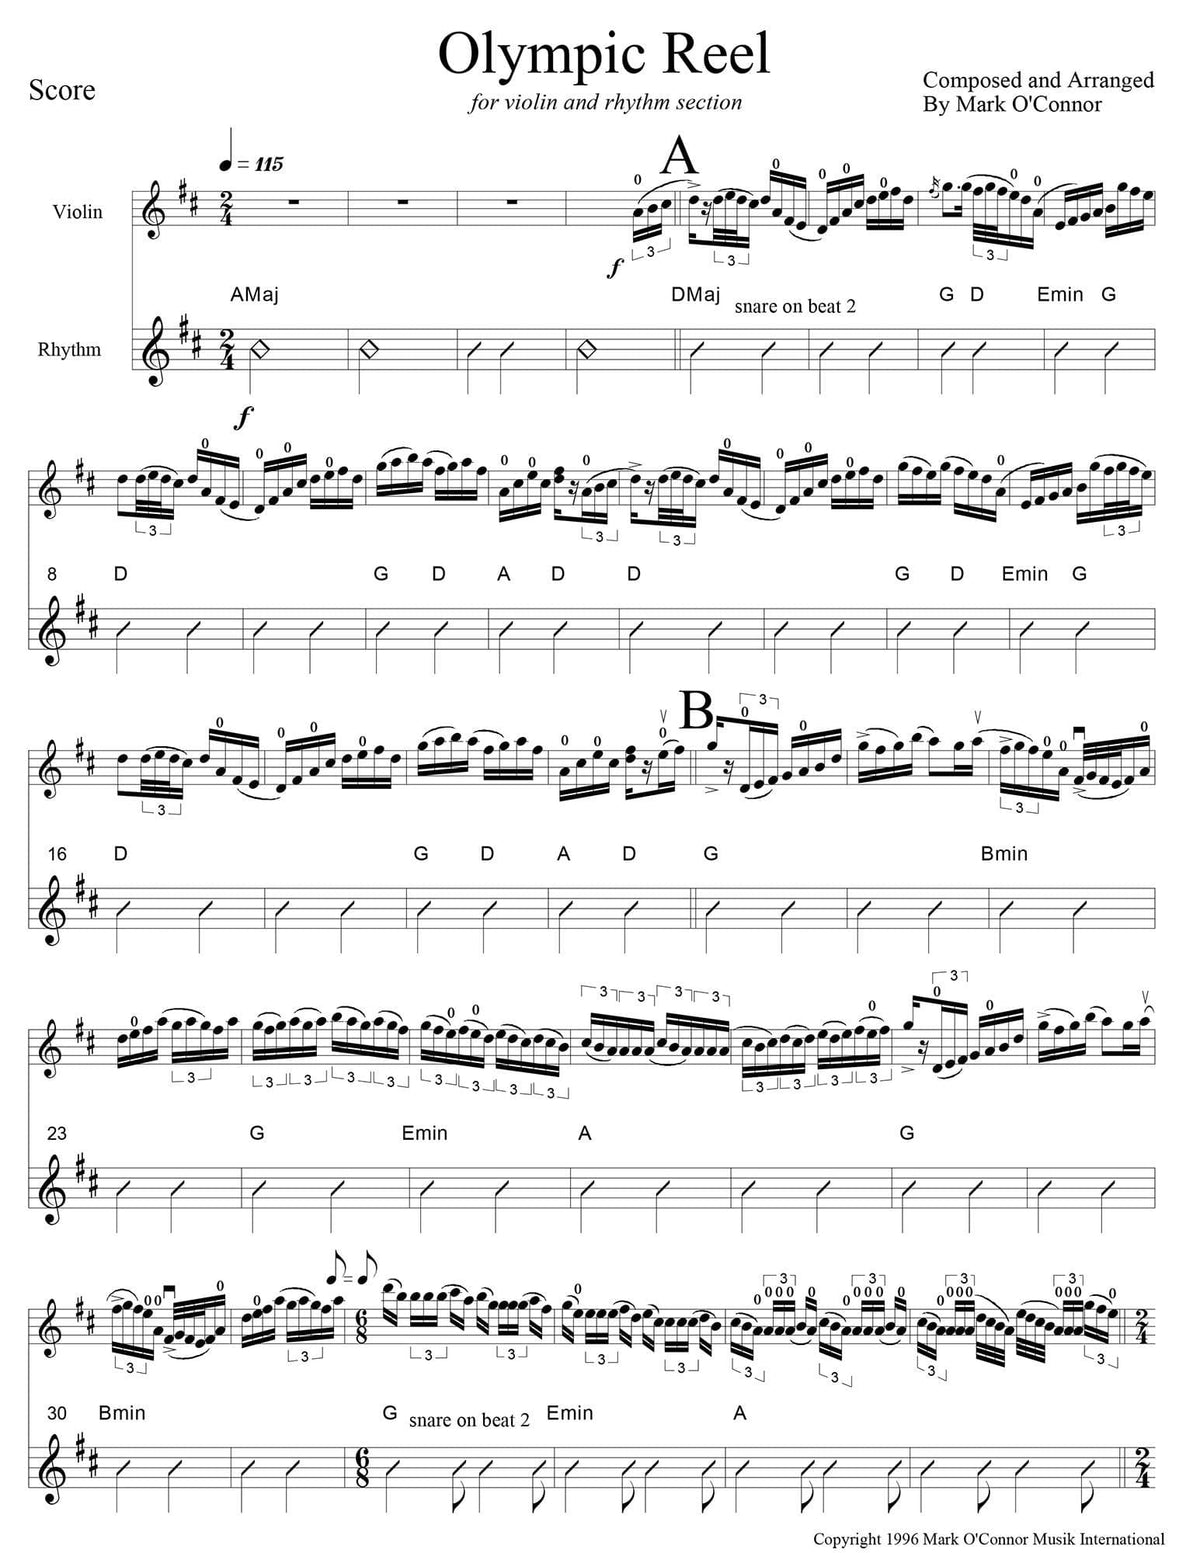 O'Connor, Mark - Olympic Reel for Violin and Folk Instrument - Score (w/ Rhythm) - Digital Download